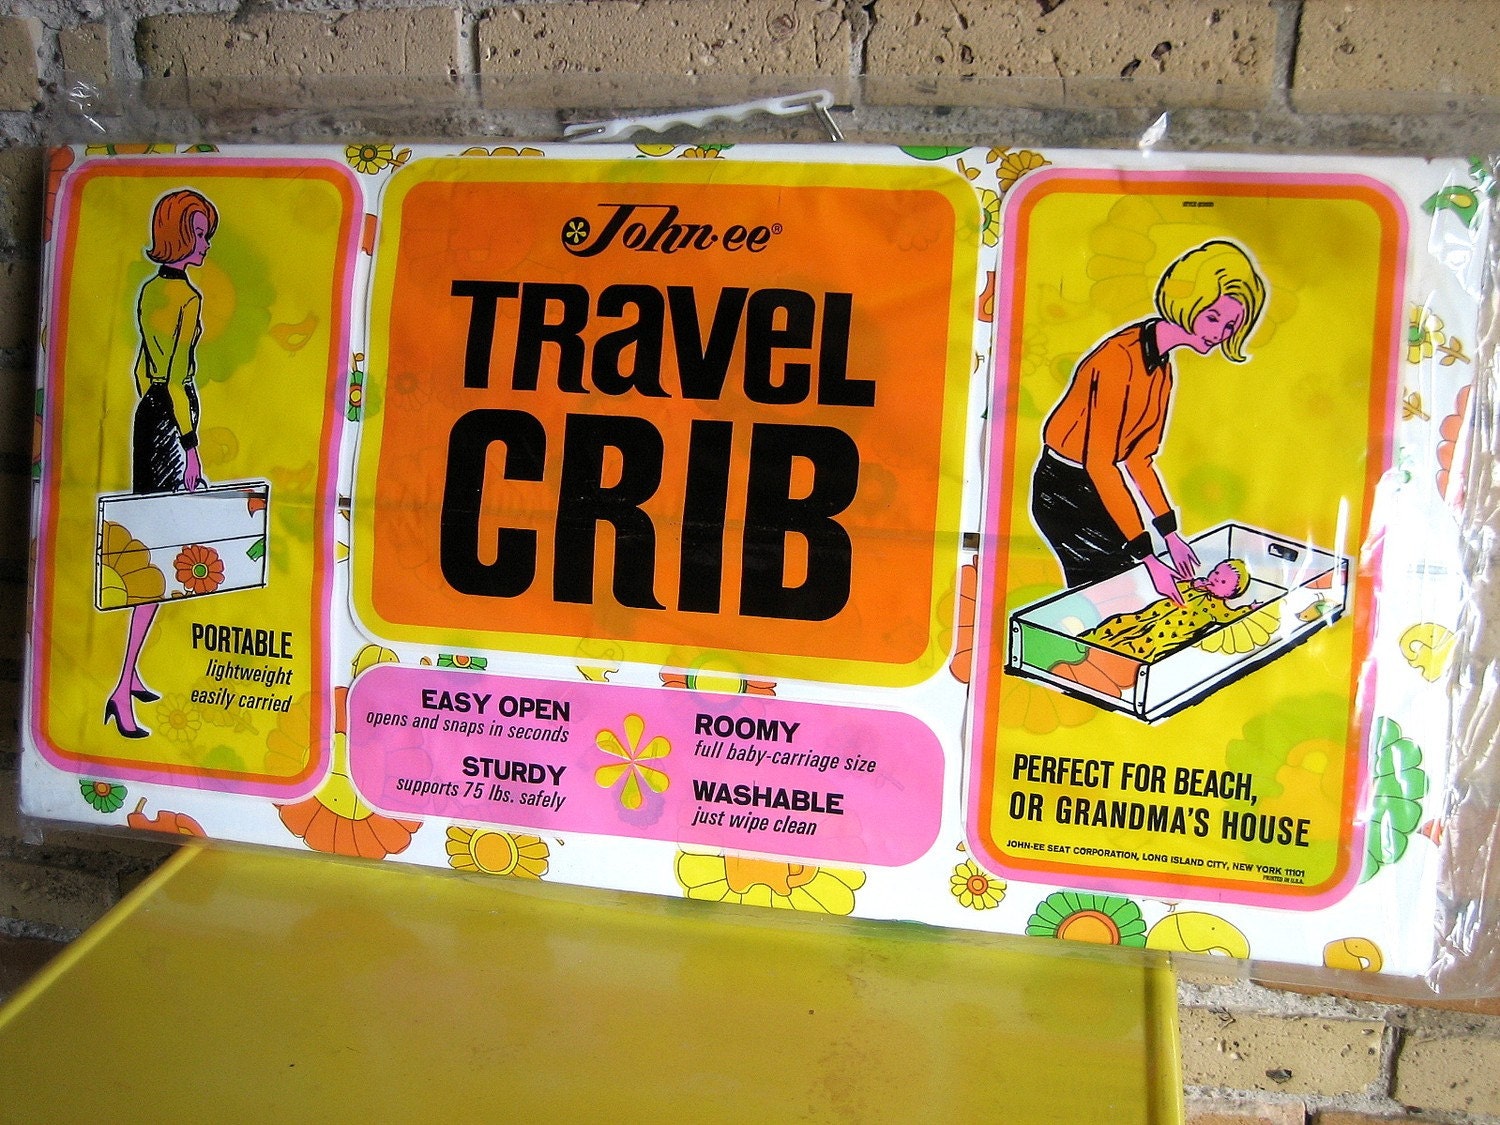 John-ee Travel Crib 60s